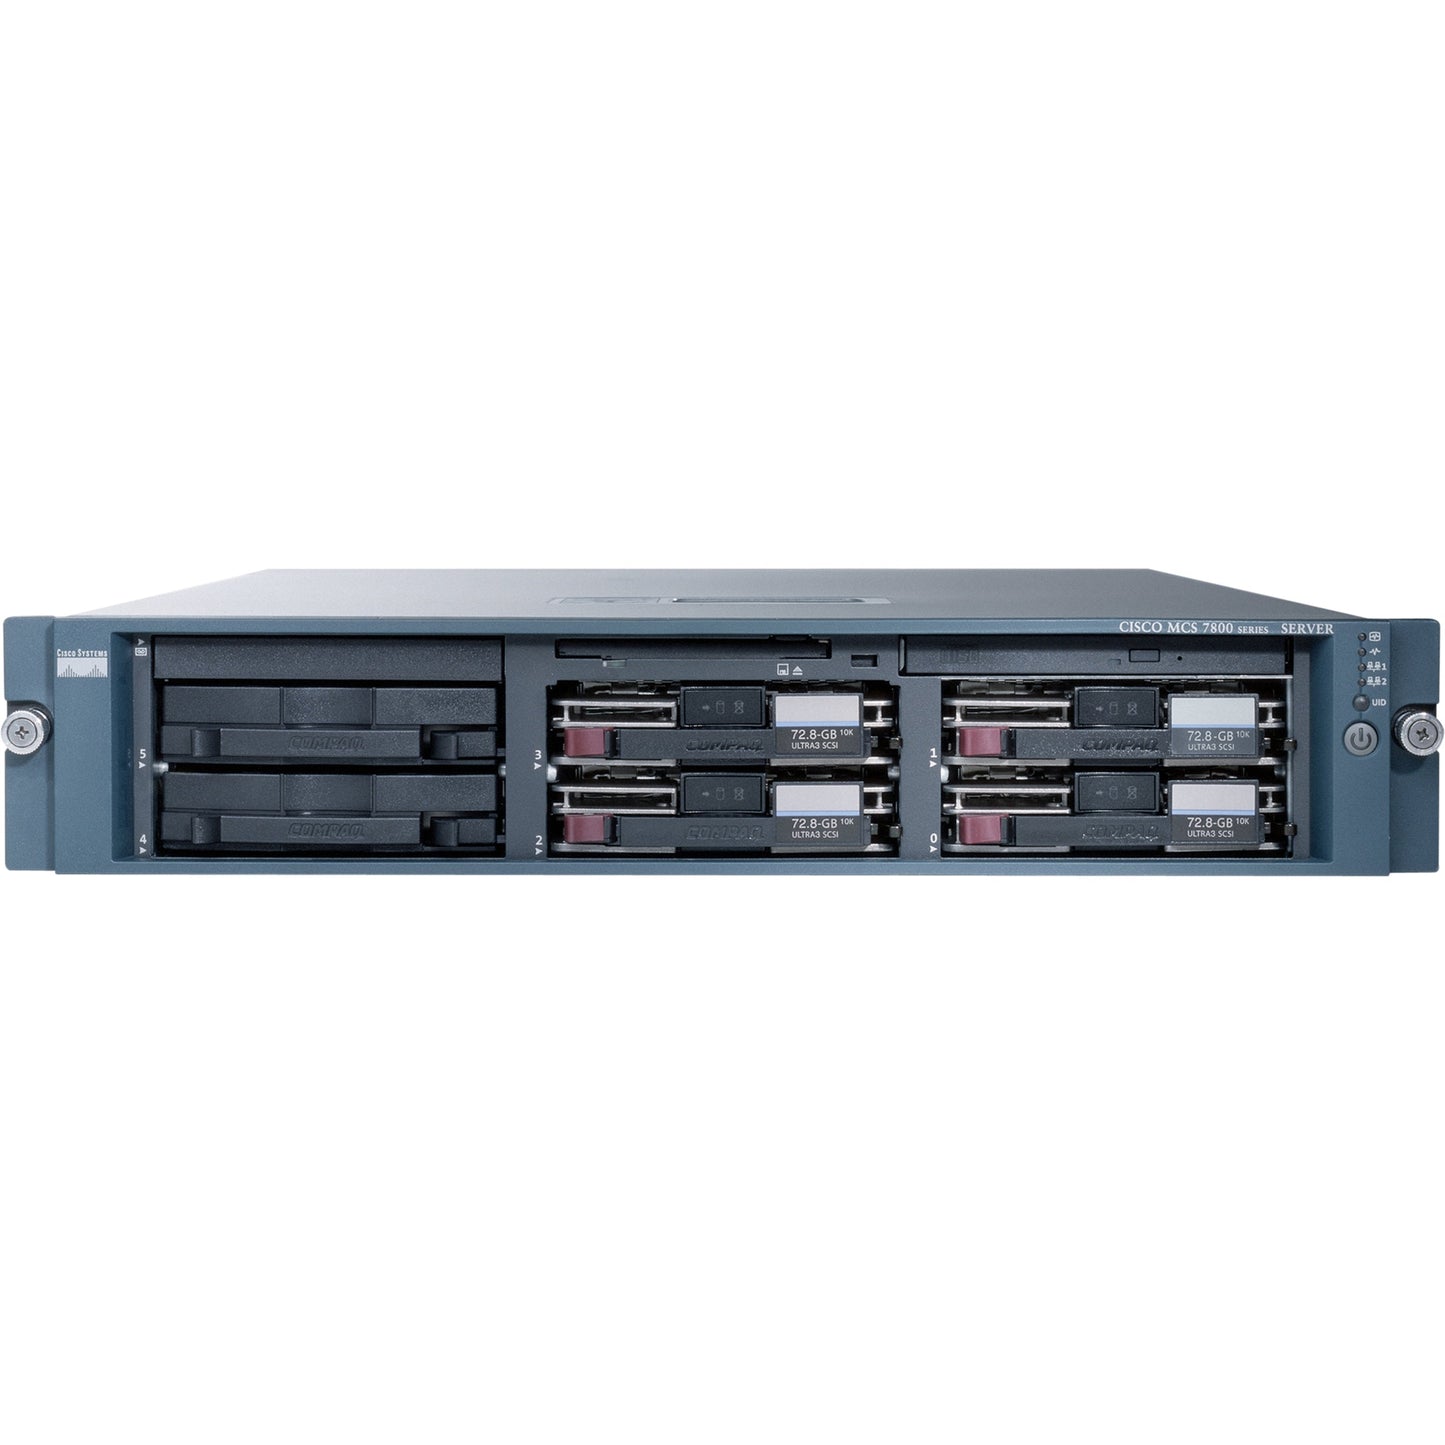 Cisco 7800 MCS 7835-I3-V05 2U Rack Server - 1 x Intel Xeon E5504 2 GHz - 4 GB RAM - 600 GB HDD - (2 x 300GB) HDD Configuration - Serial Attached SCSI (SAS) Controller